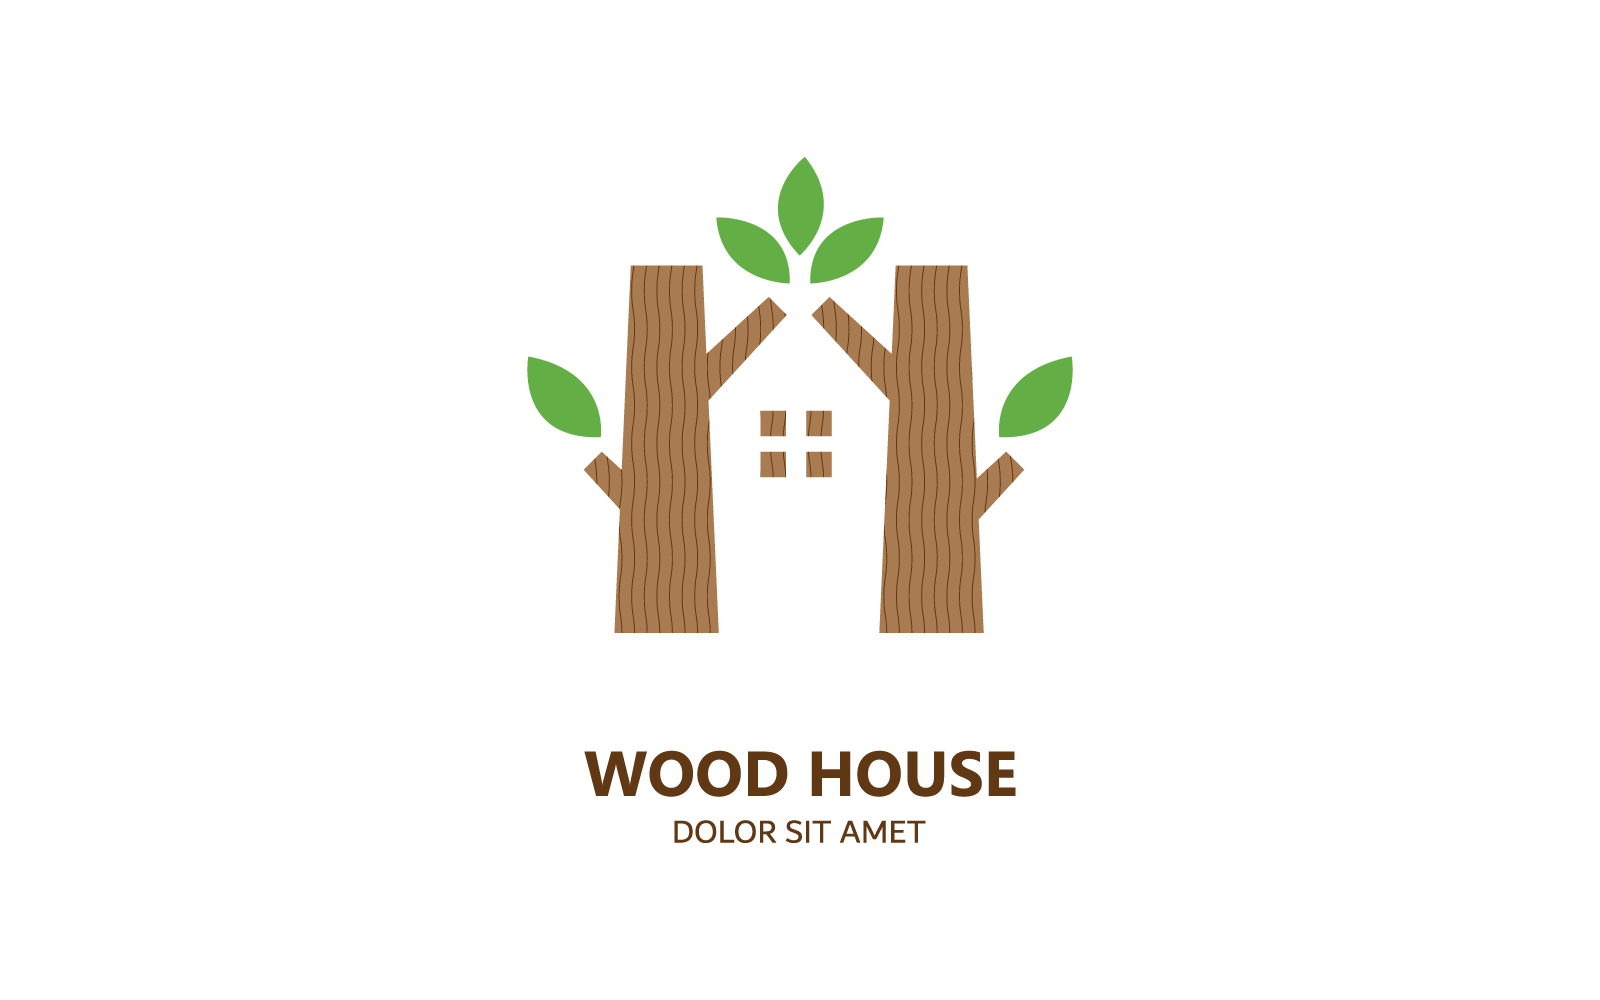 Wood house logo vector flat design